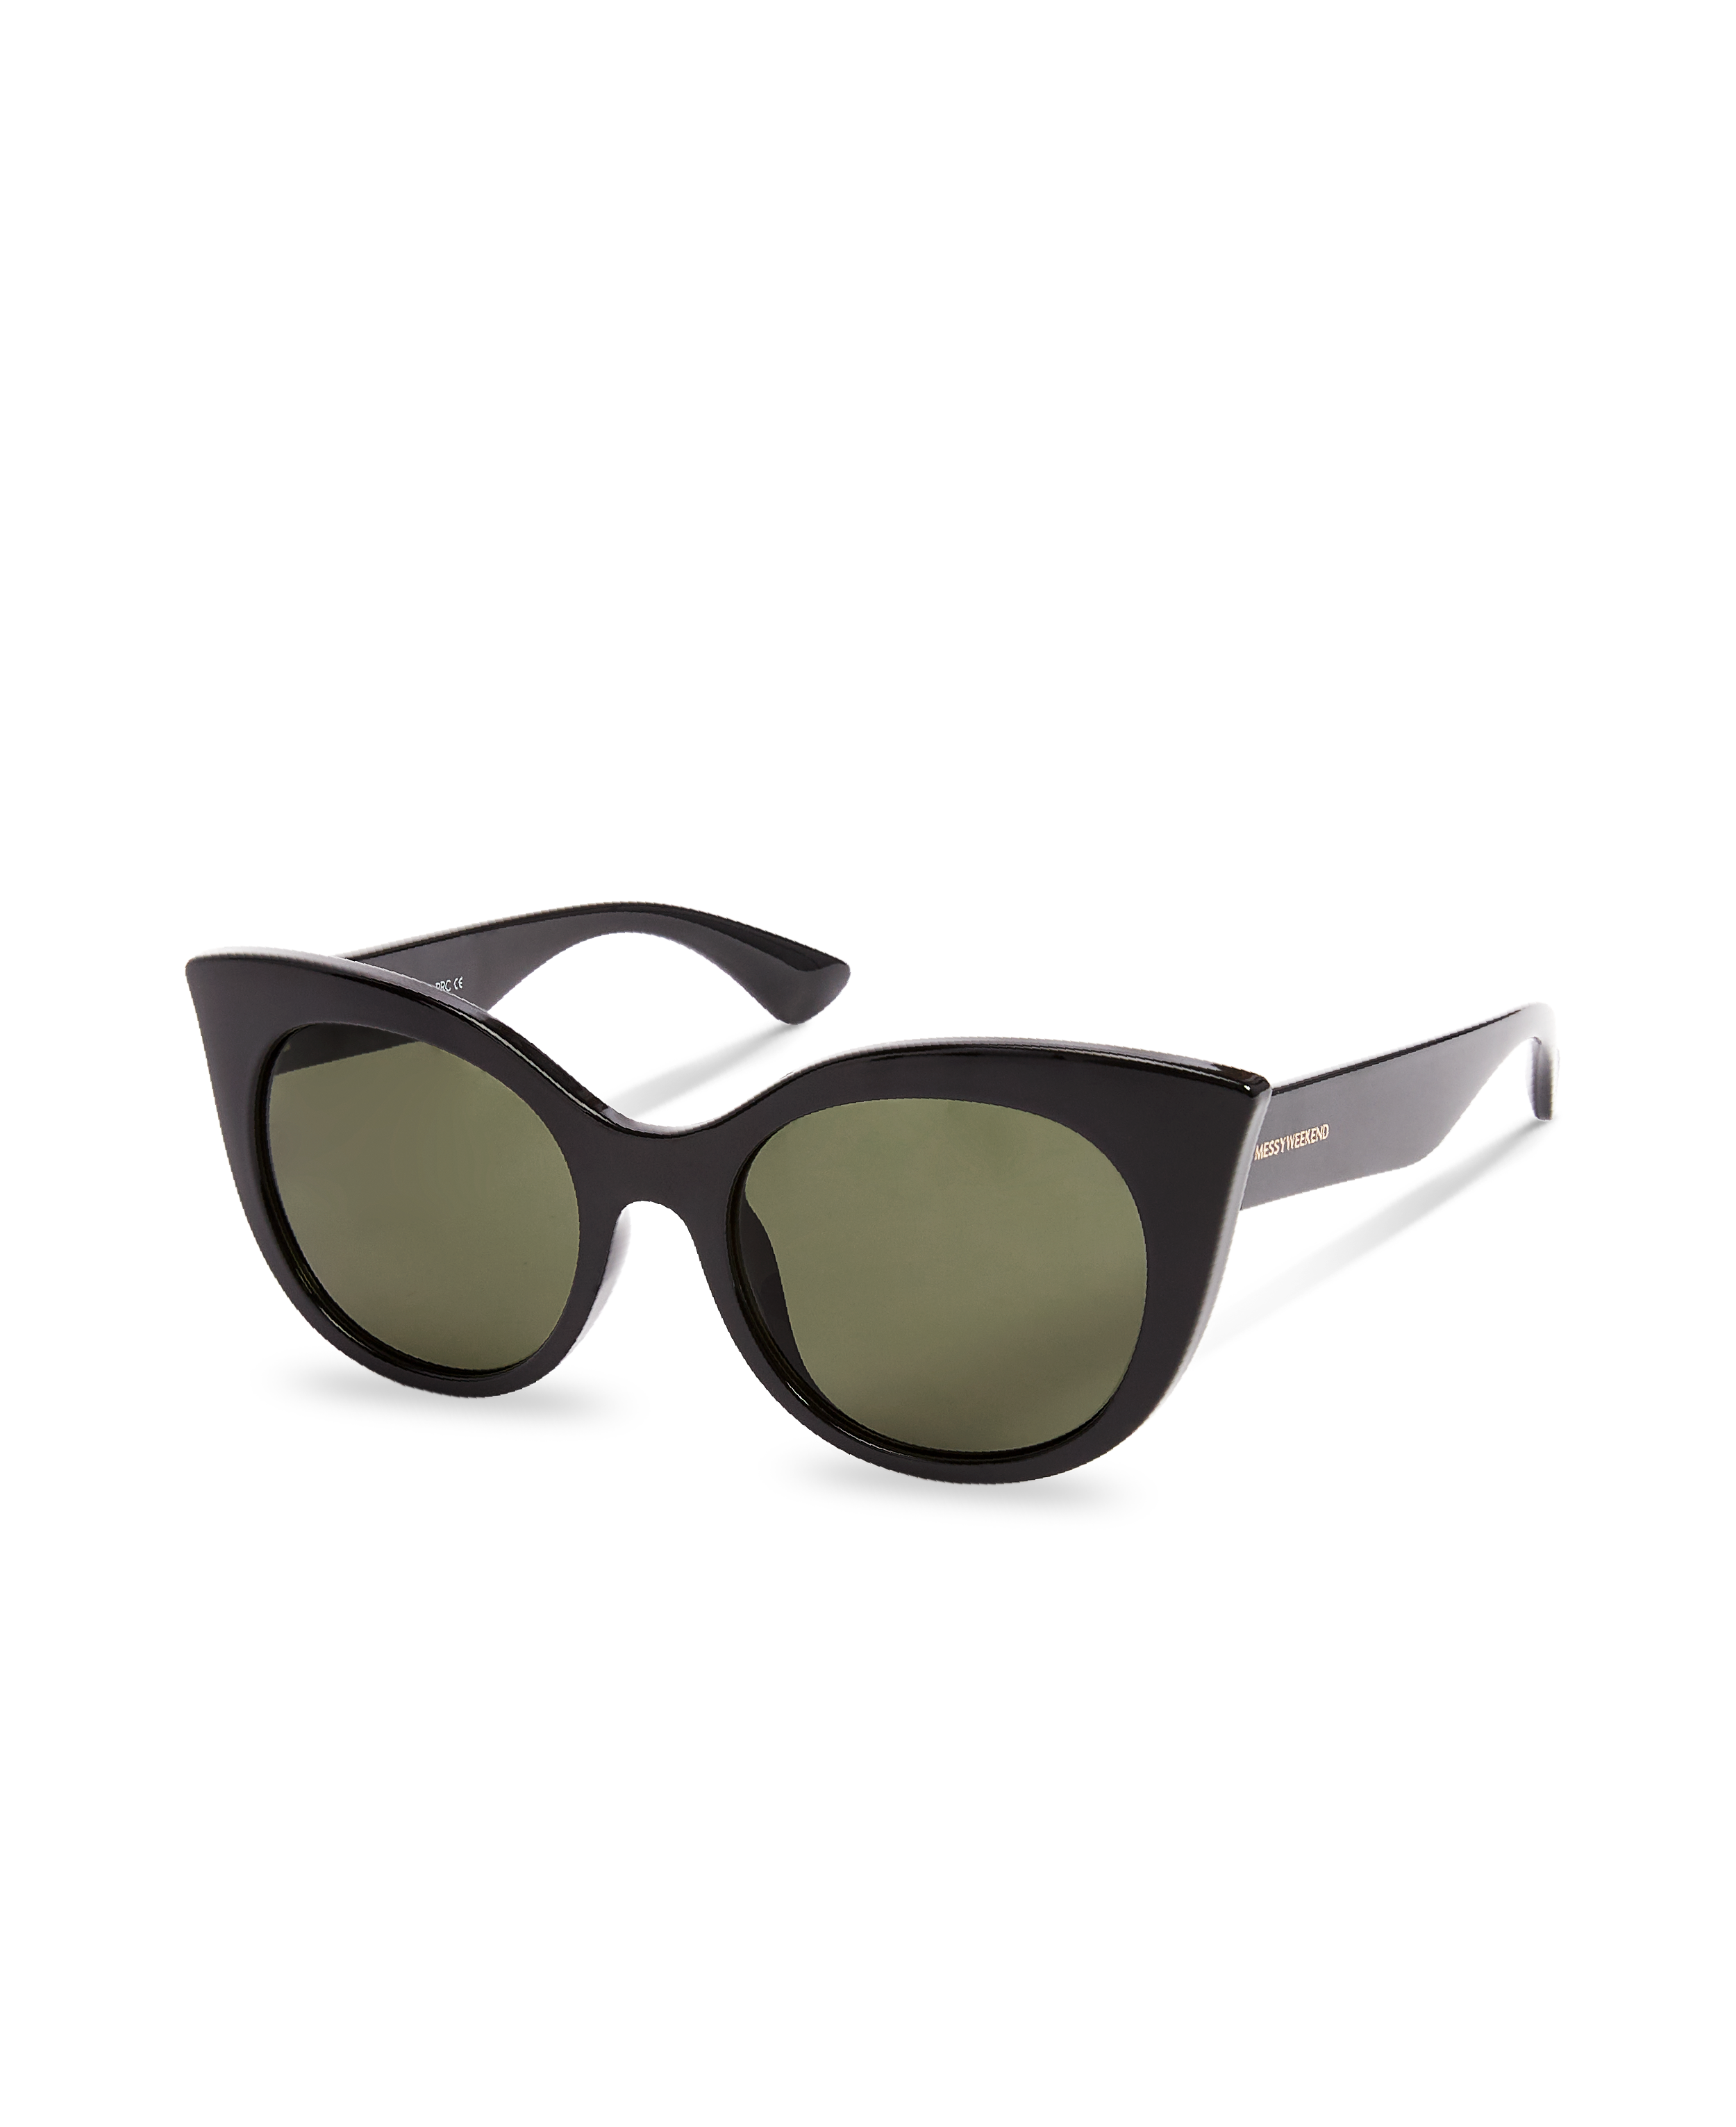 Sunglasses Thelma in Black w. Green lenses